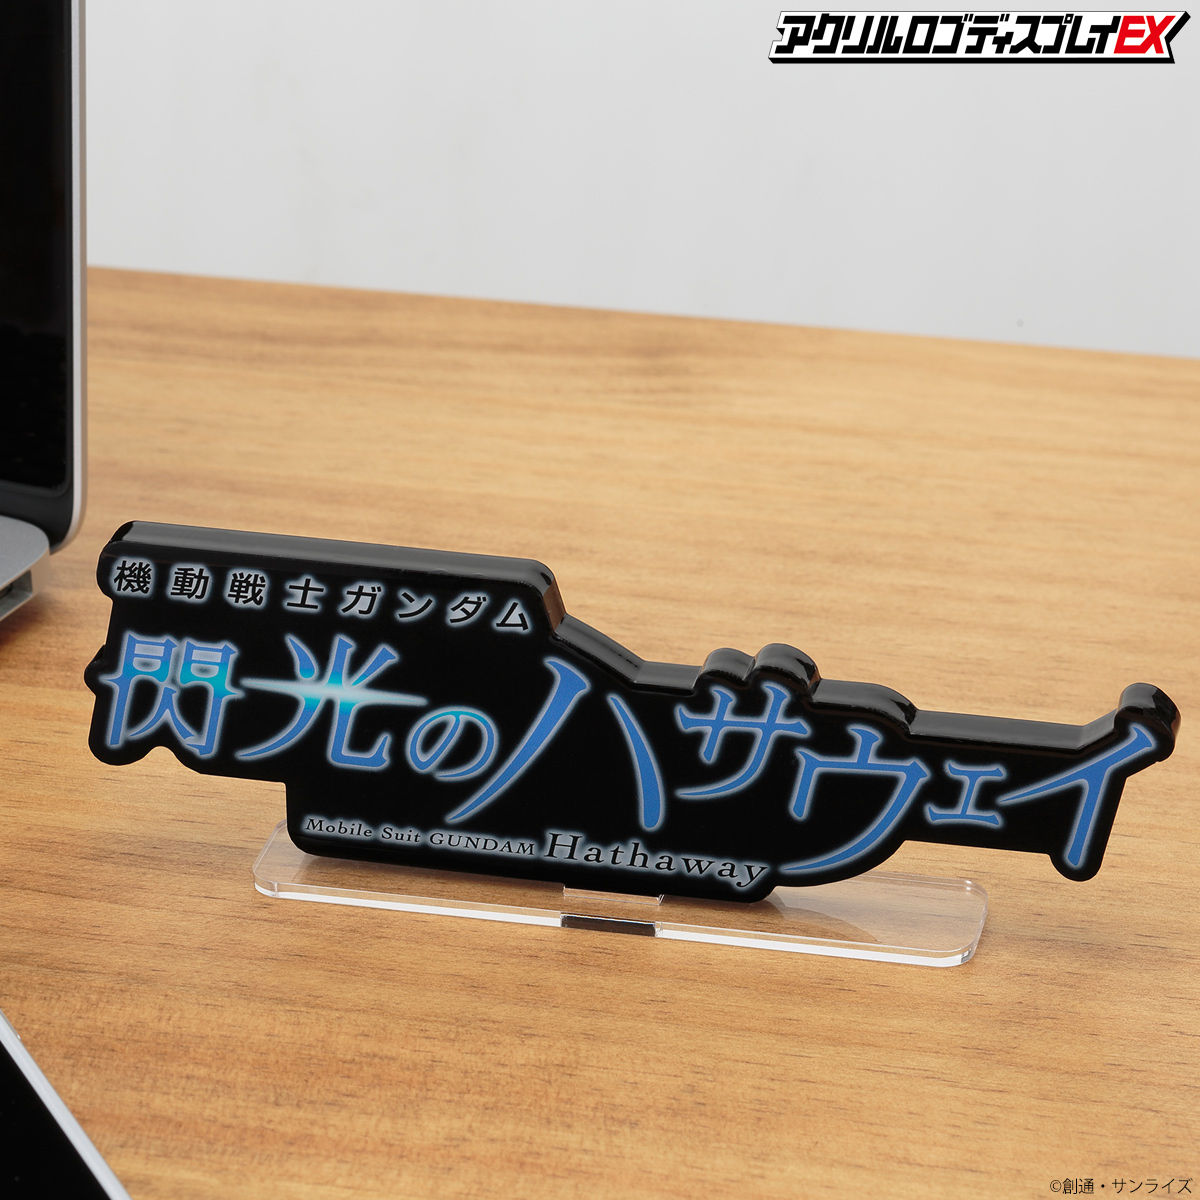 Mega Size of Acrylic Logo Display EX Mobile Suit Gundam Hathaway in Black Background